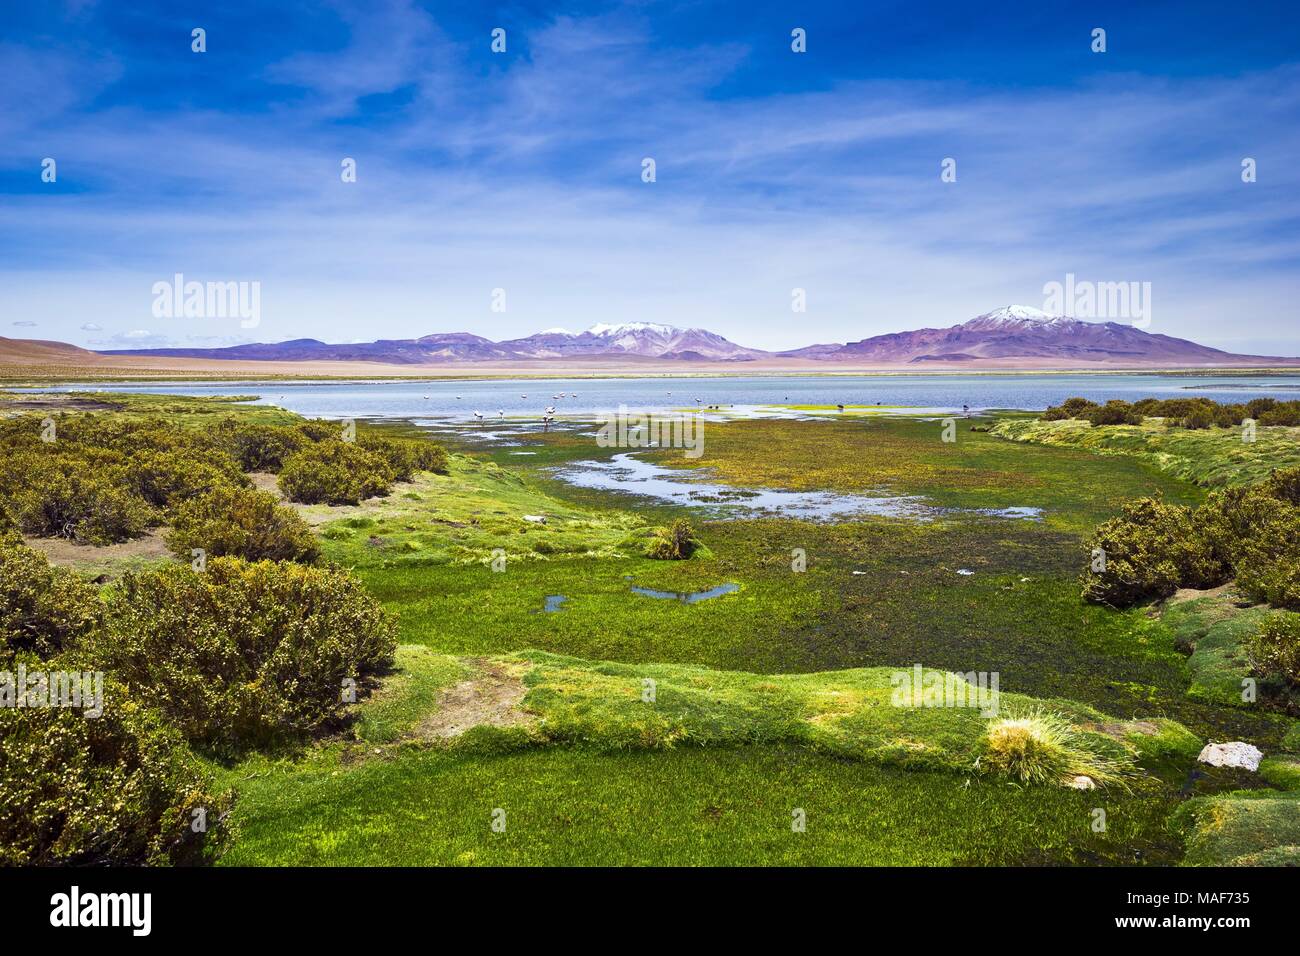 Salar de Tara in Chile, a tyical altiplano salt lake in the dry Atacama region Stock Photo